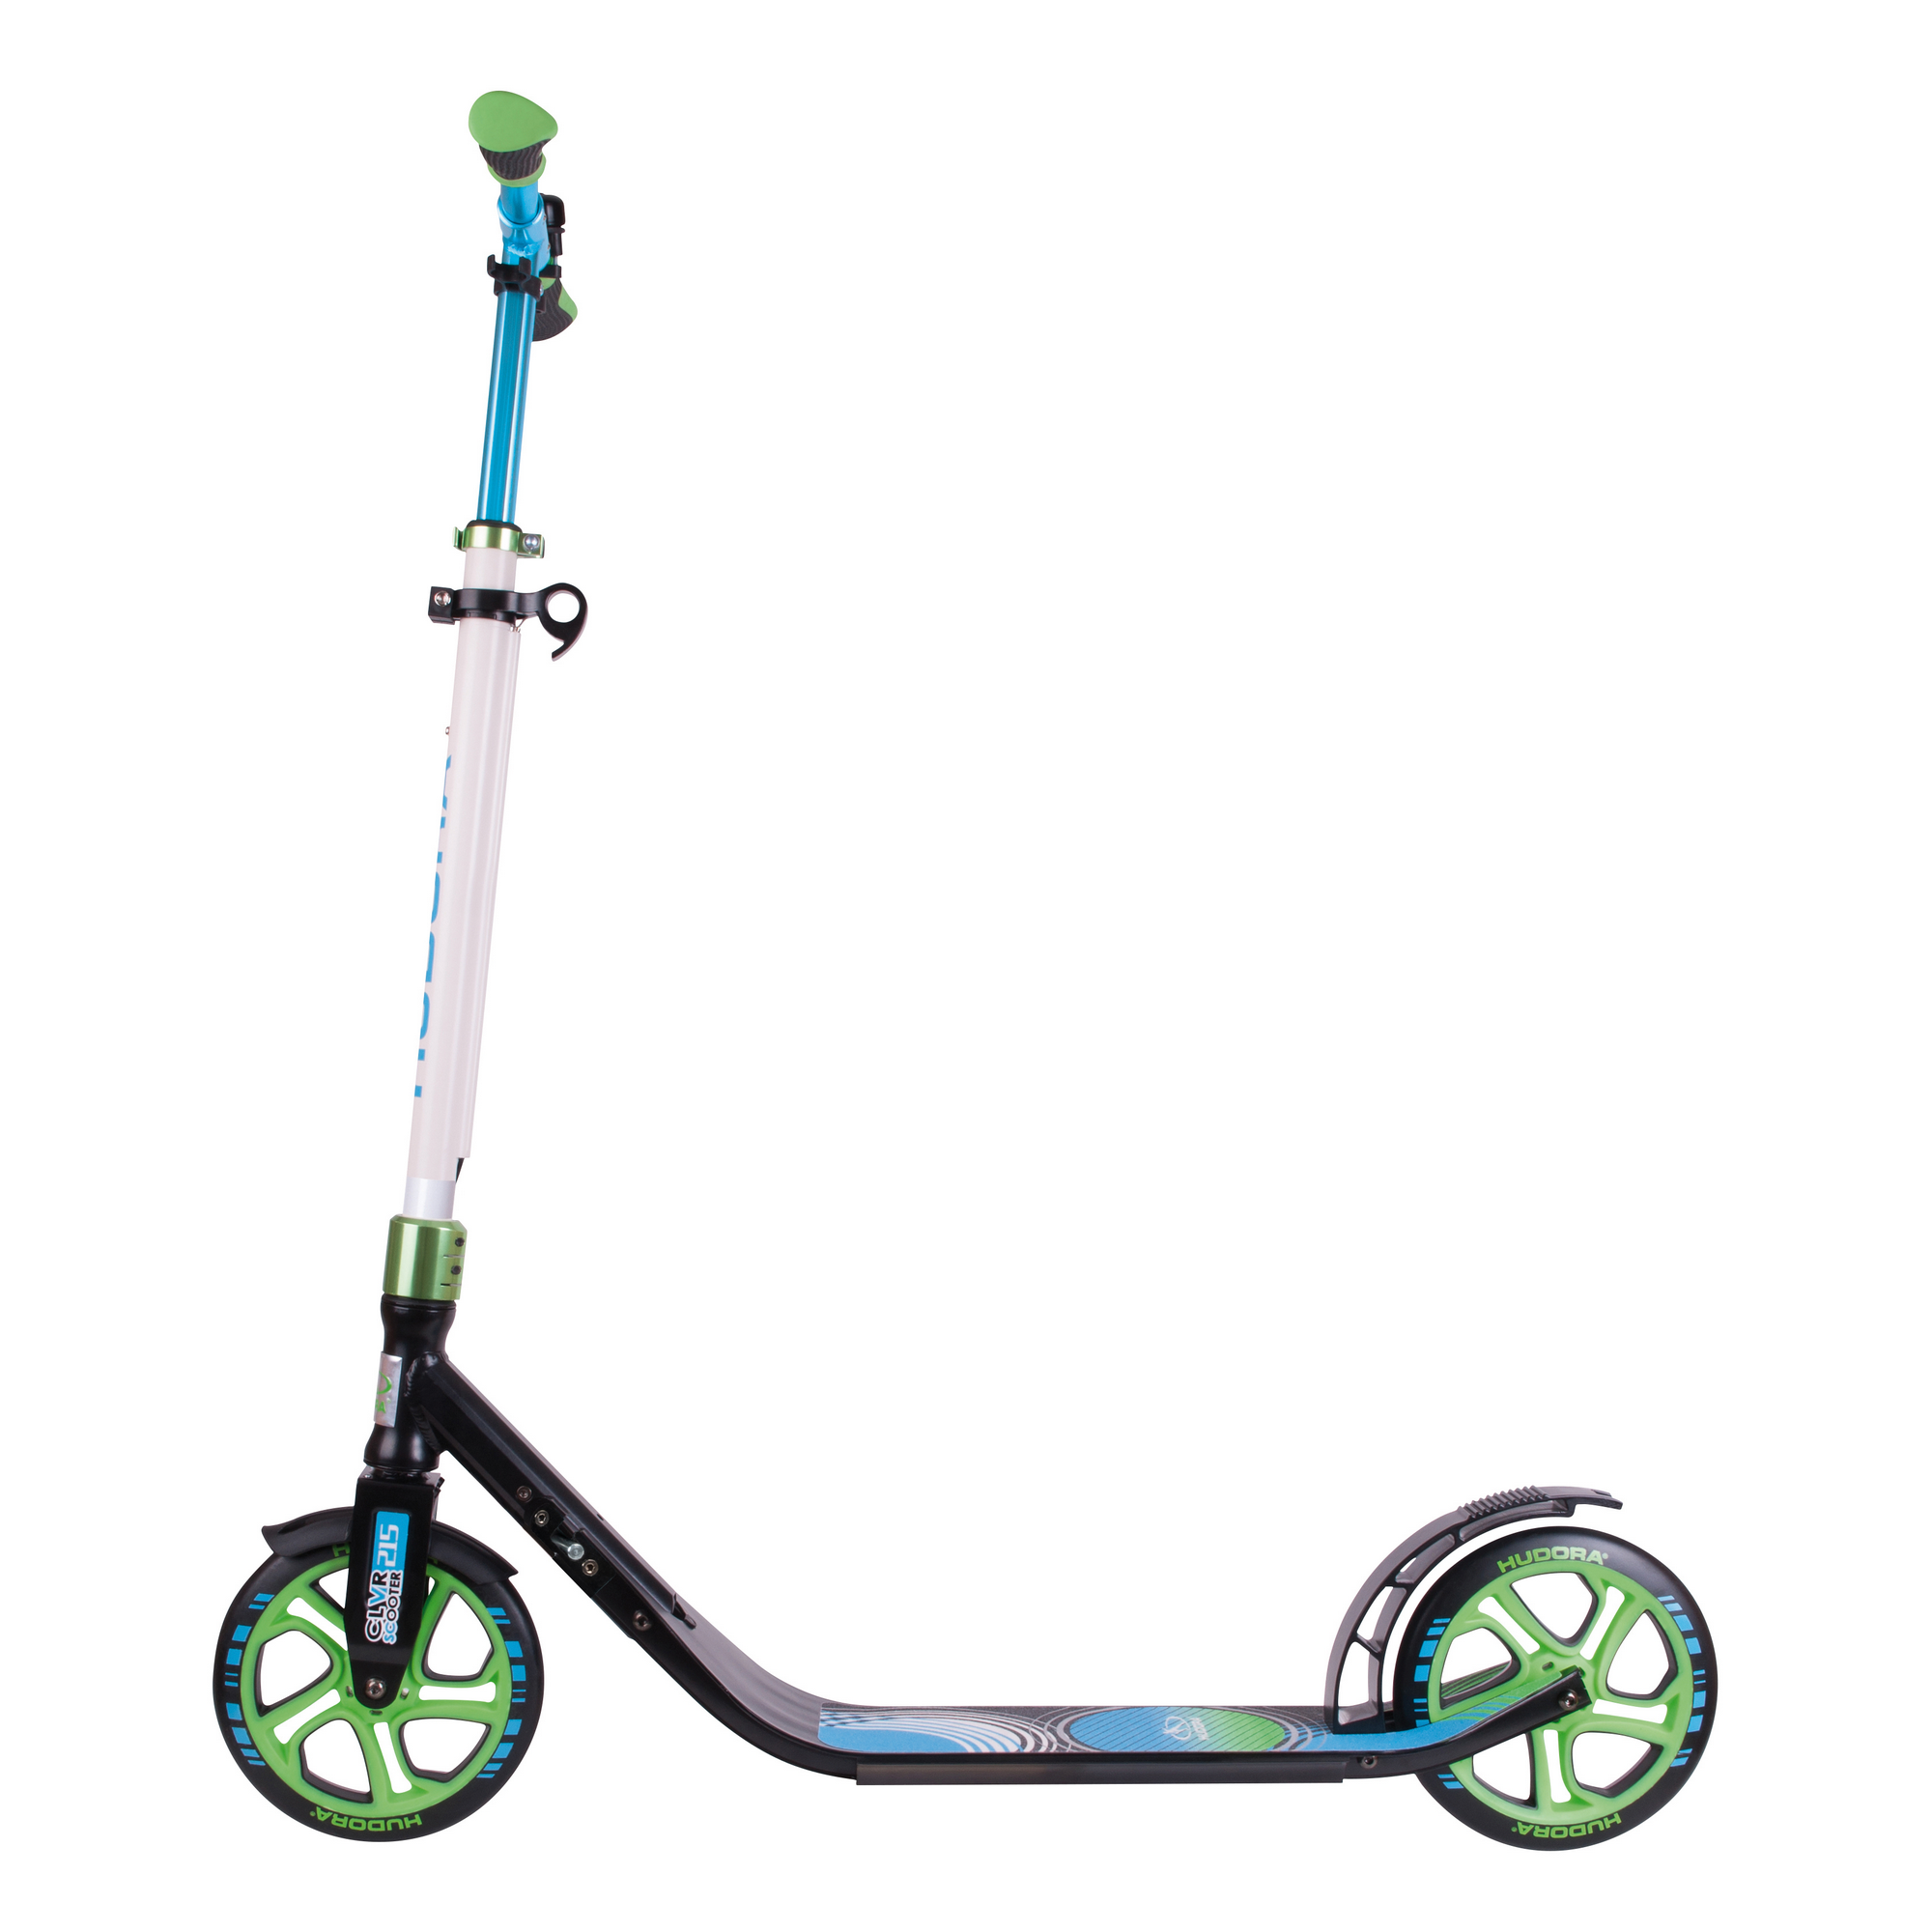 Scooter CLVR 215, blau/grün + product picture